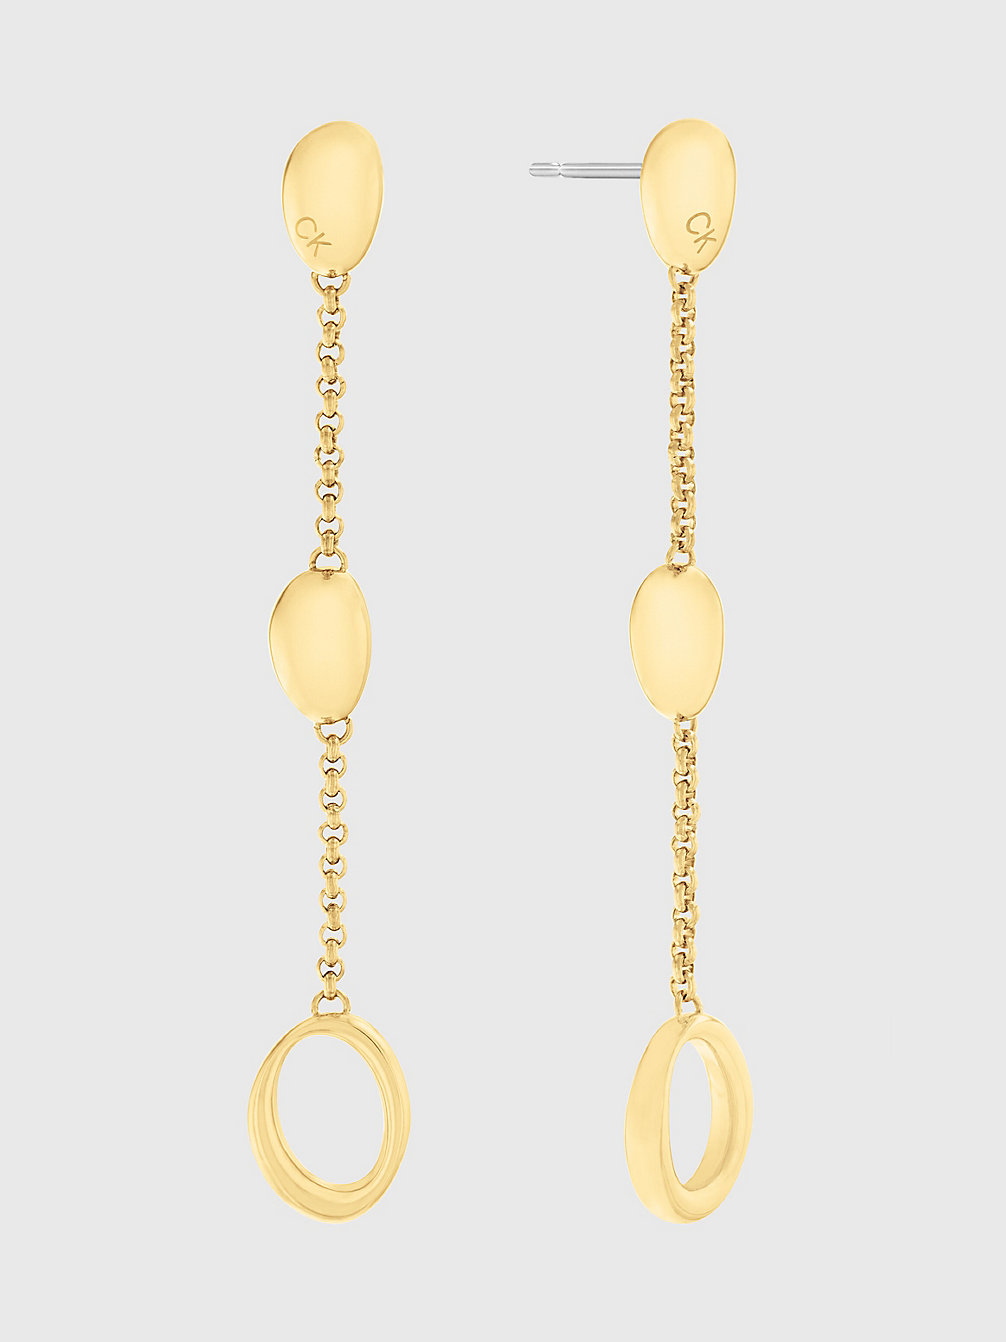 GOLD Earrings - Playful Organic Shapes undefined women Calvin Klein